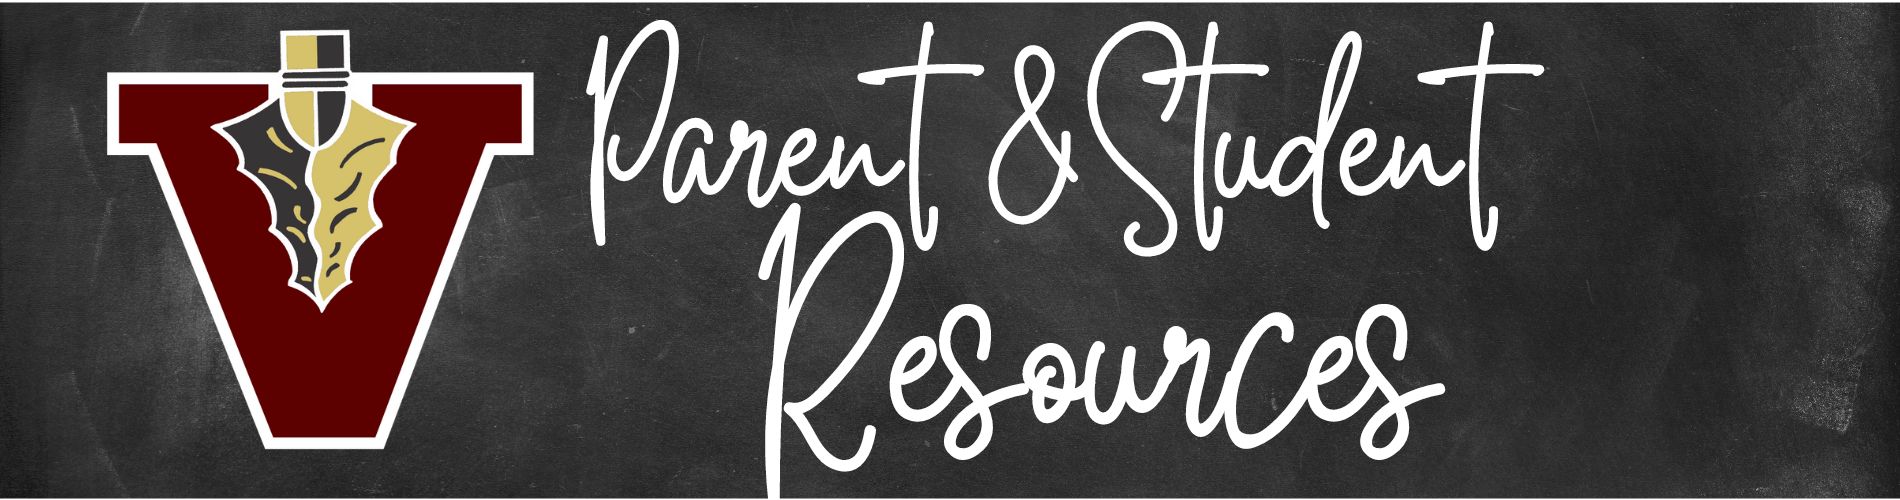 Parent & Student Resources